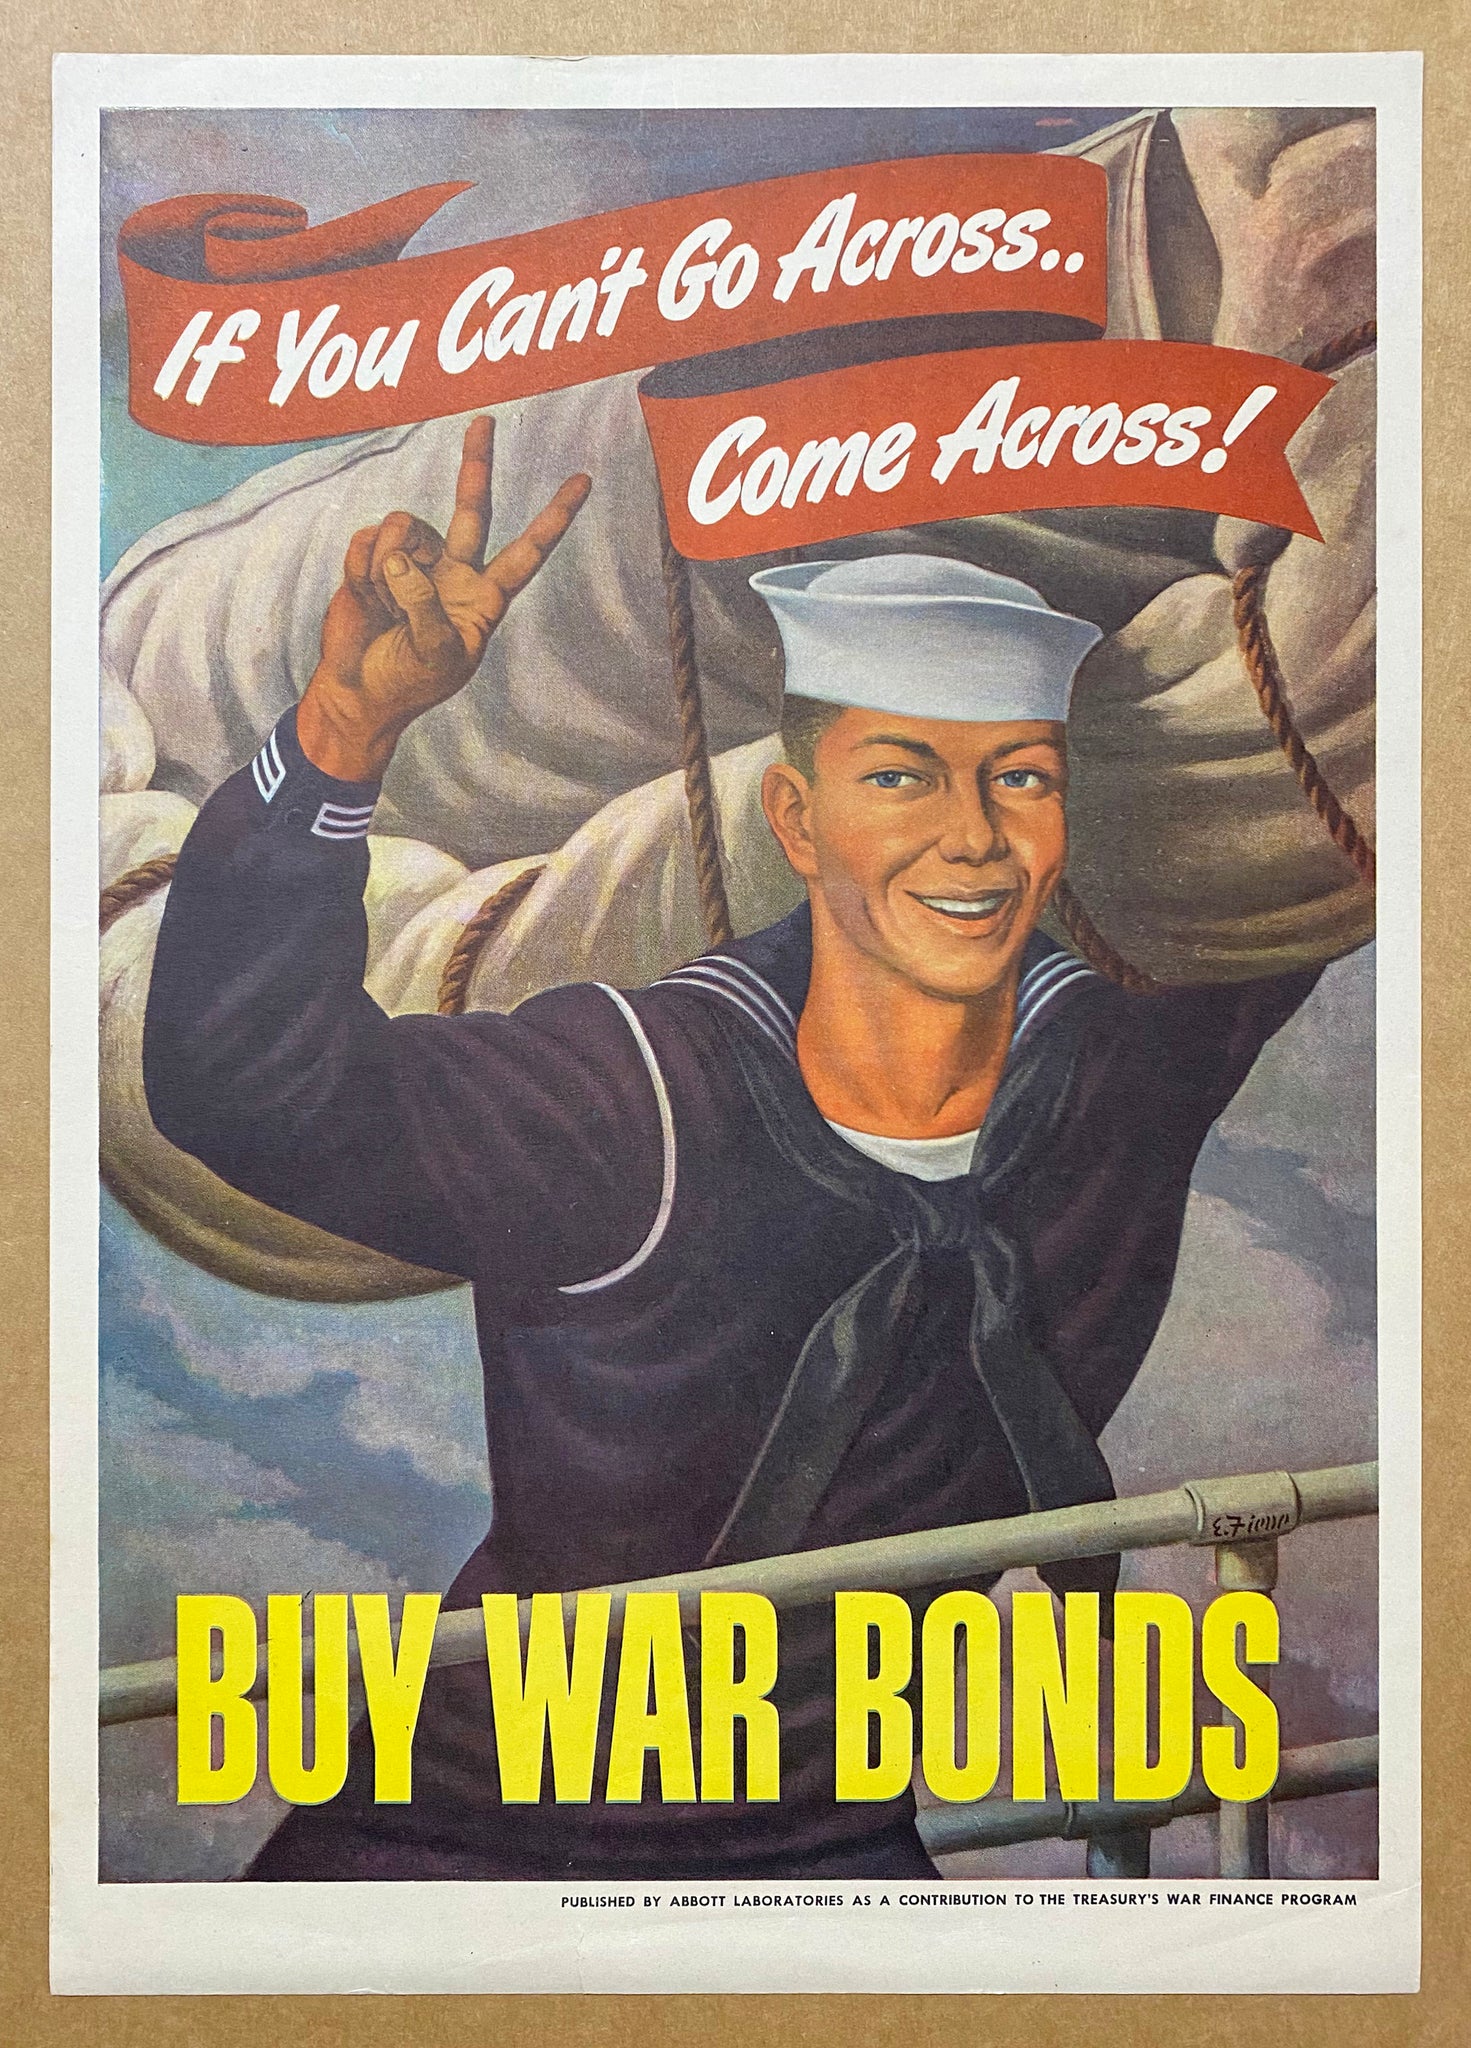 1943 If You Can’t Go Across Come Across Buy War Bonds Ernest Fiene Abbott Labs